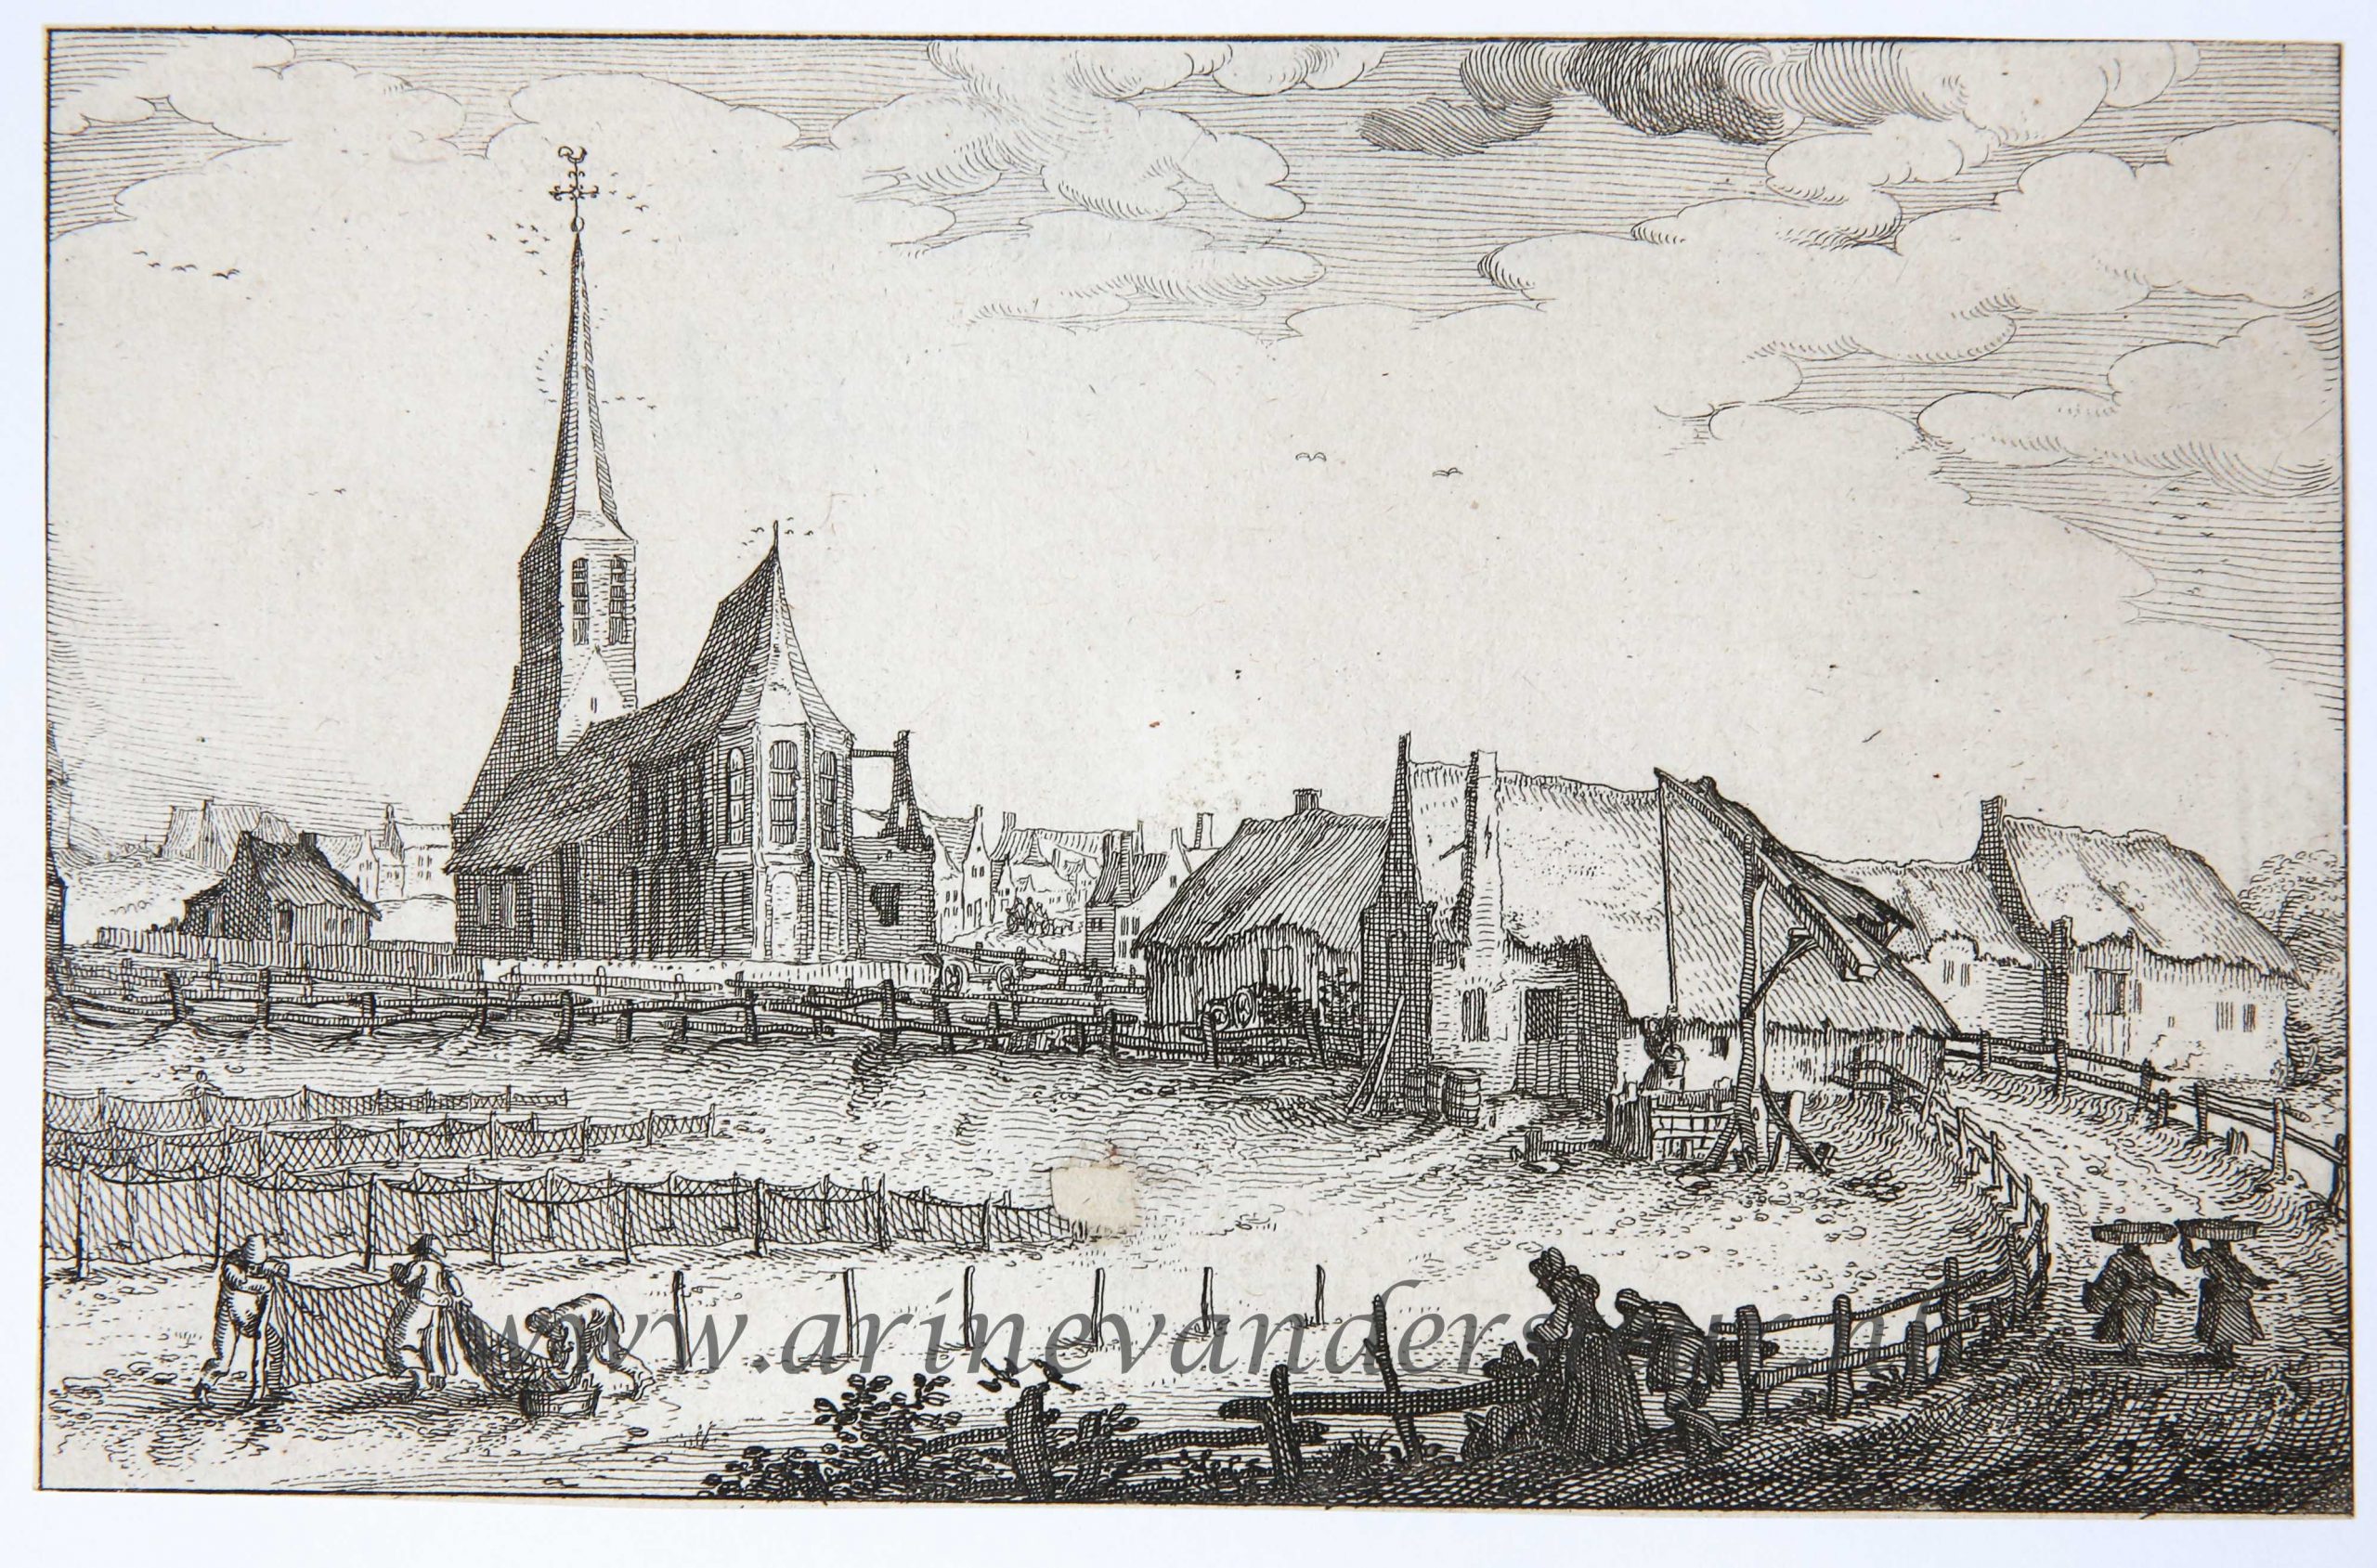 [Antique print, etching] View of the village of Zandvoort/Gezicht op het dorp Zandvoort, published 1612.